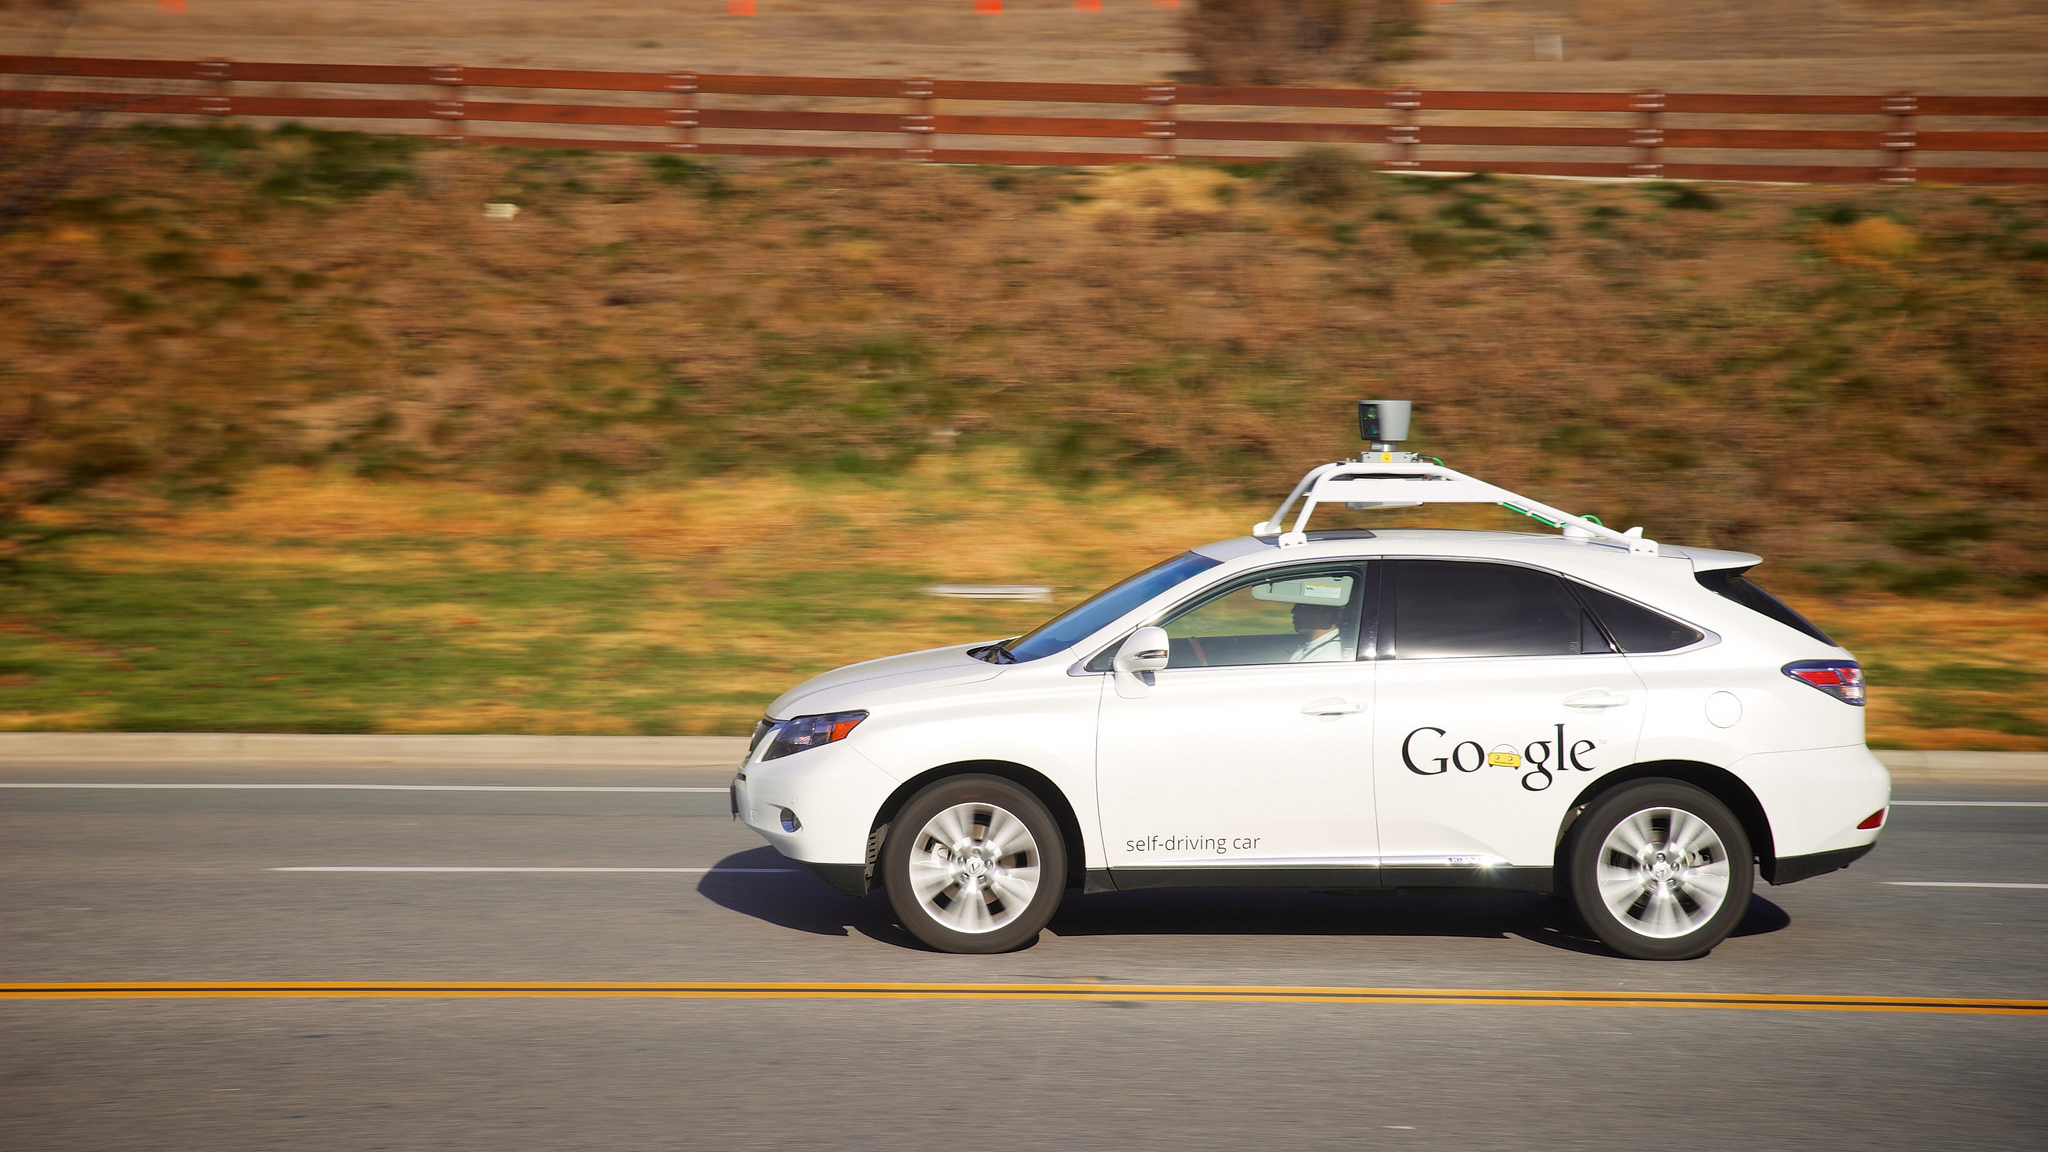 A Google self-driving car. Photo © LoKan Sardari / Flickr through a Creative Commons license